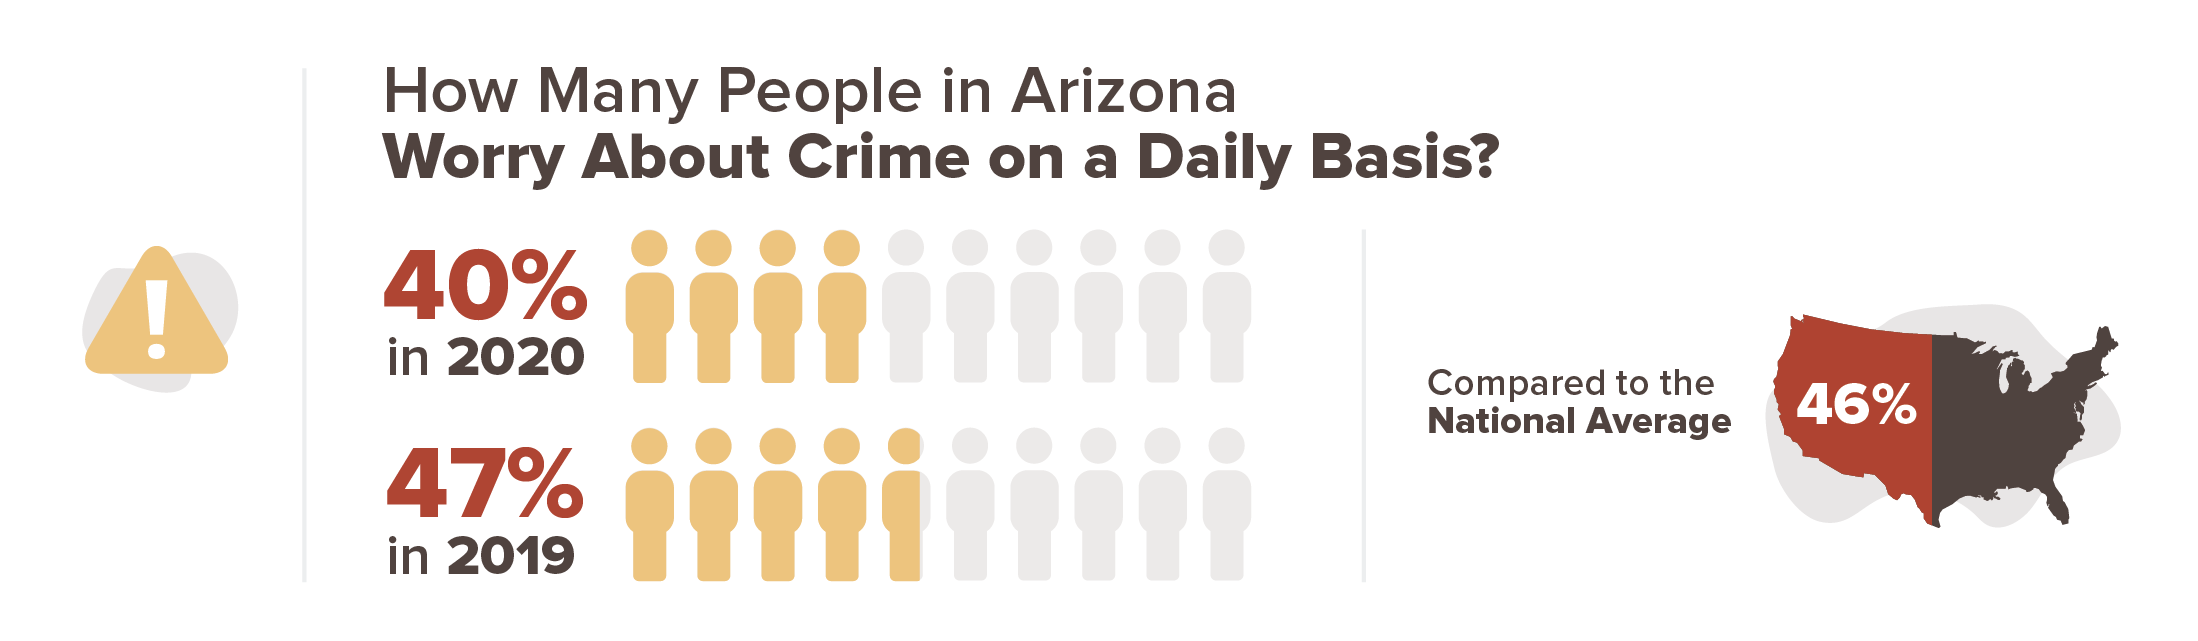 Arizona crime stats infographic